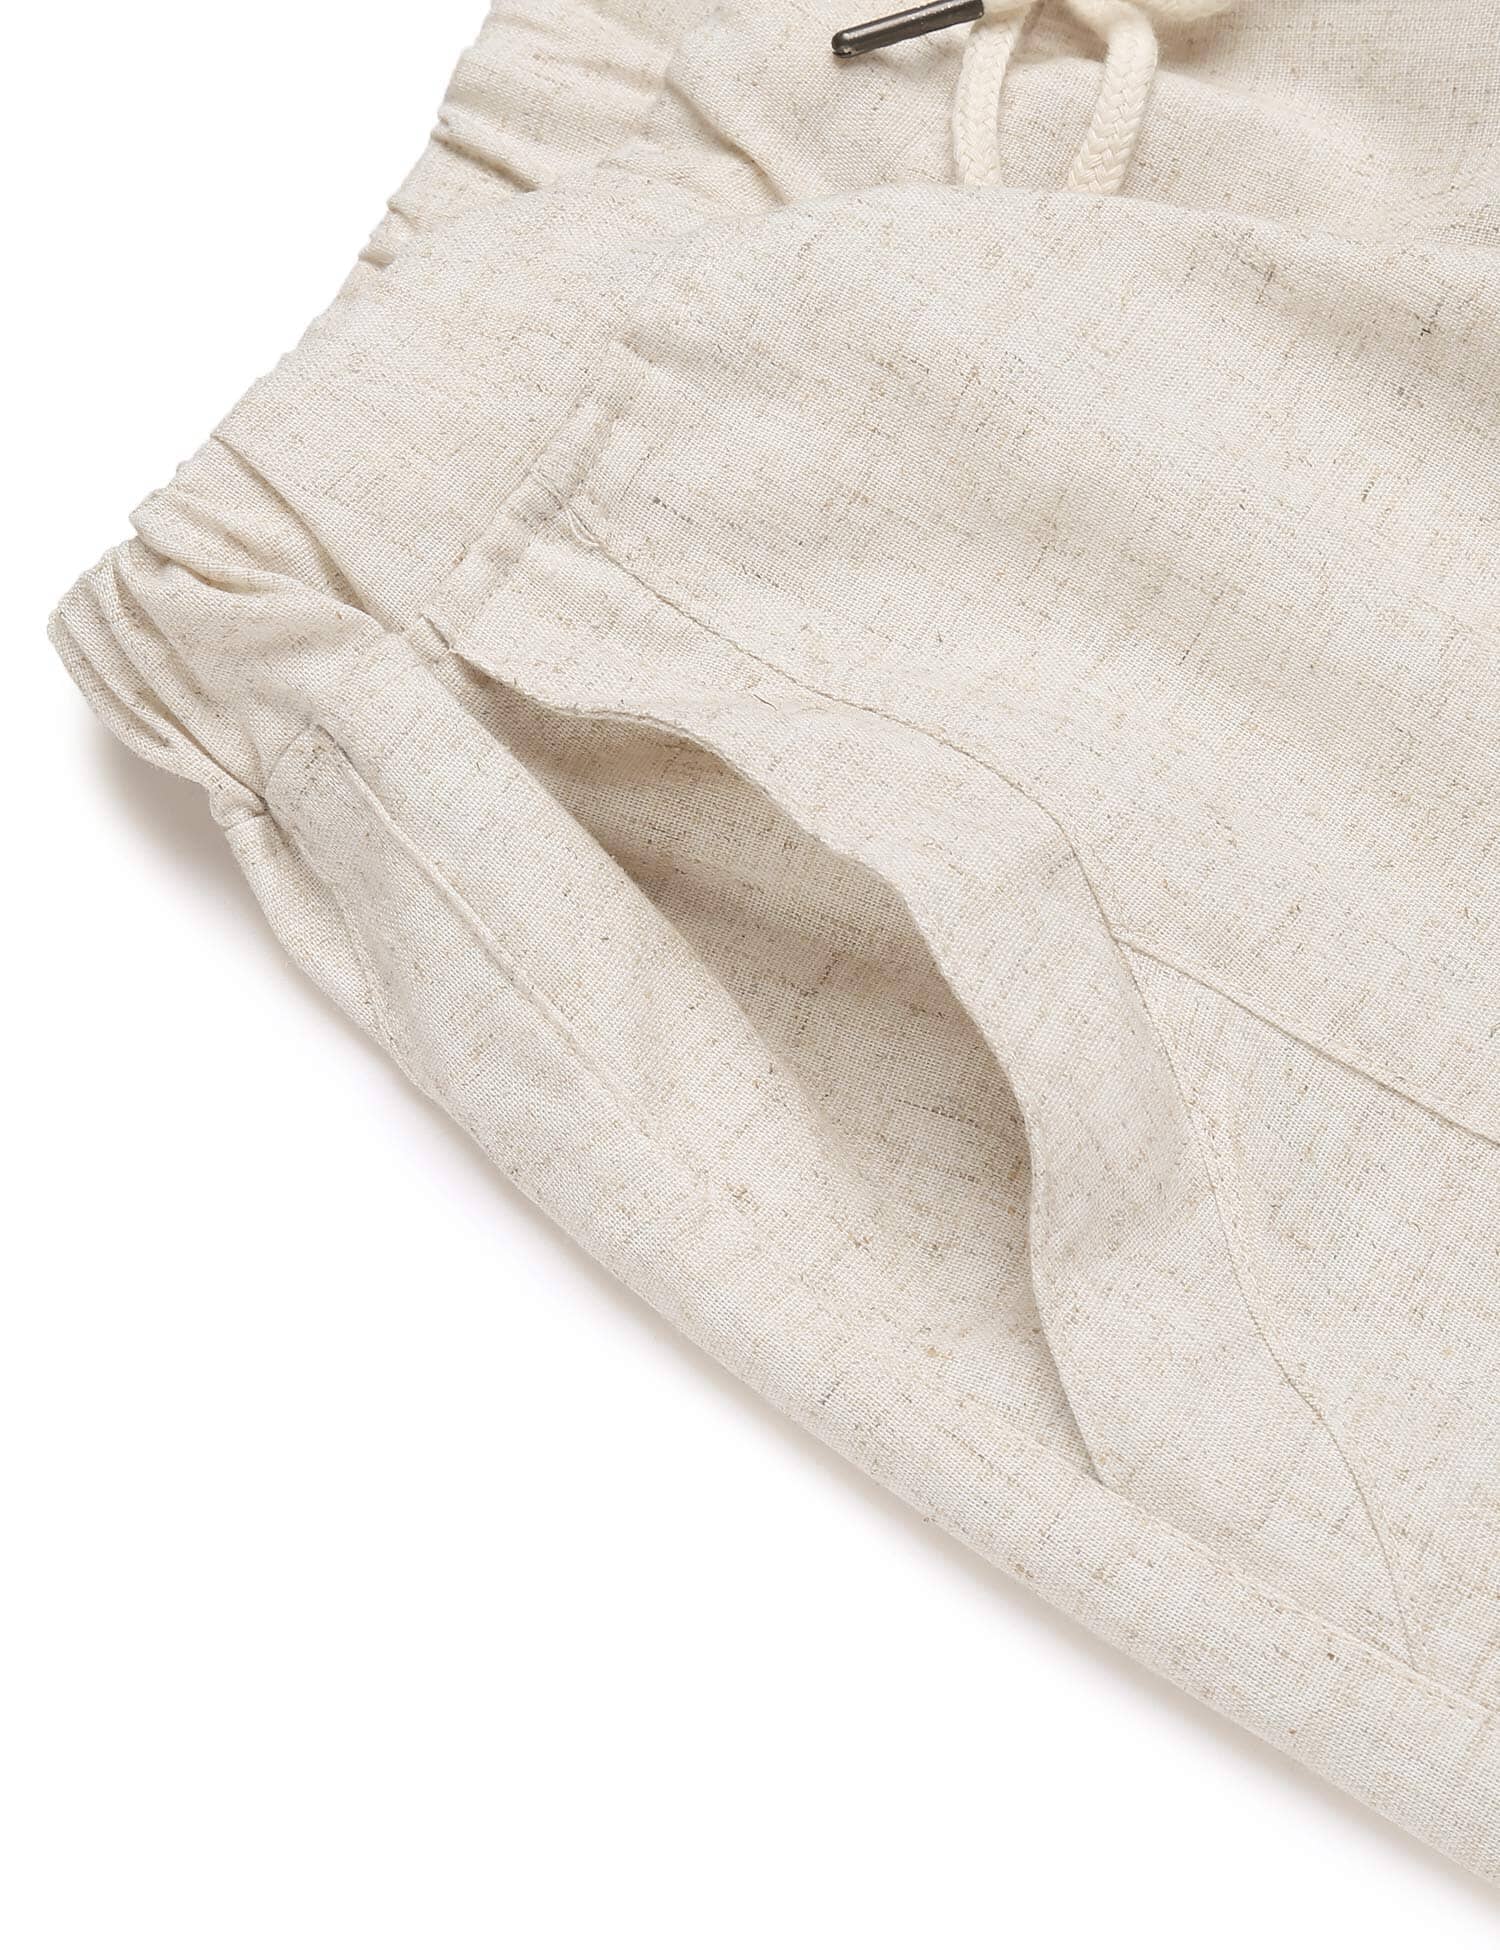 Coofandy Linen Style Beach Pants (US Only) Pants coofandy 